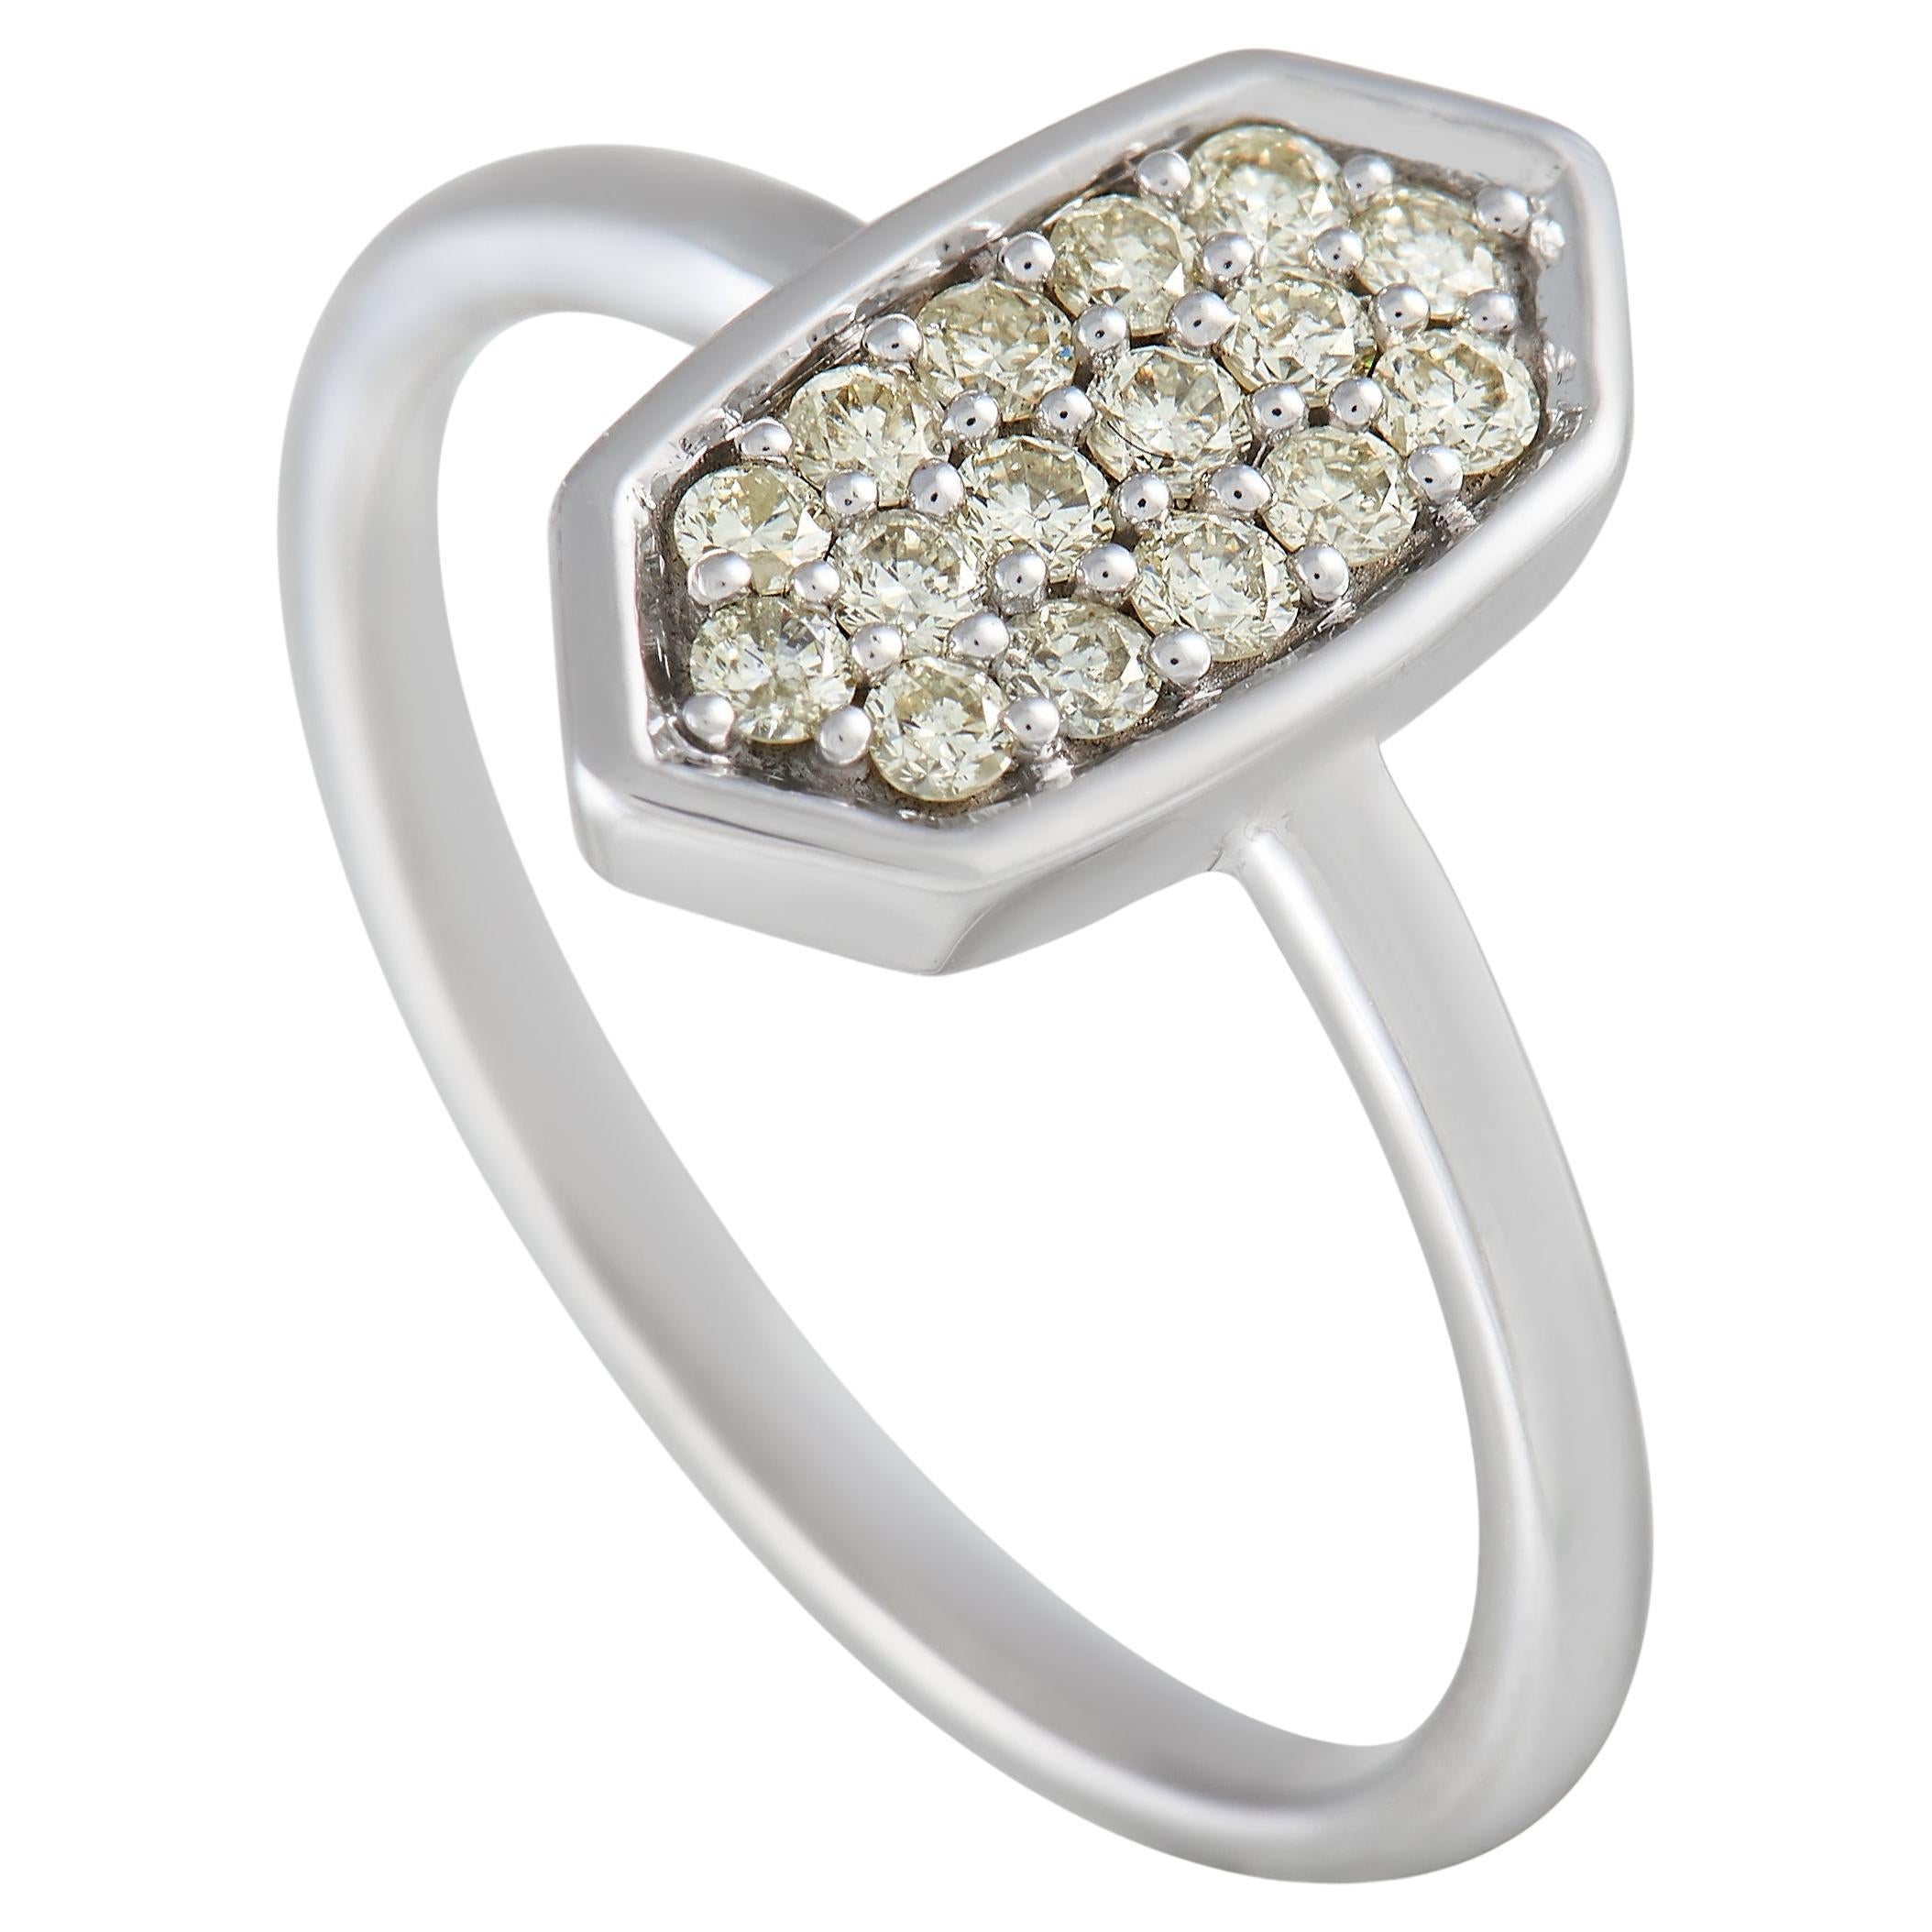 LB Exclusive 14K White Gold 0.31 ct Diamond Ring